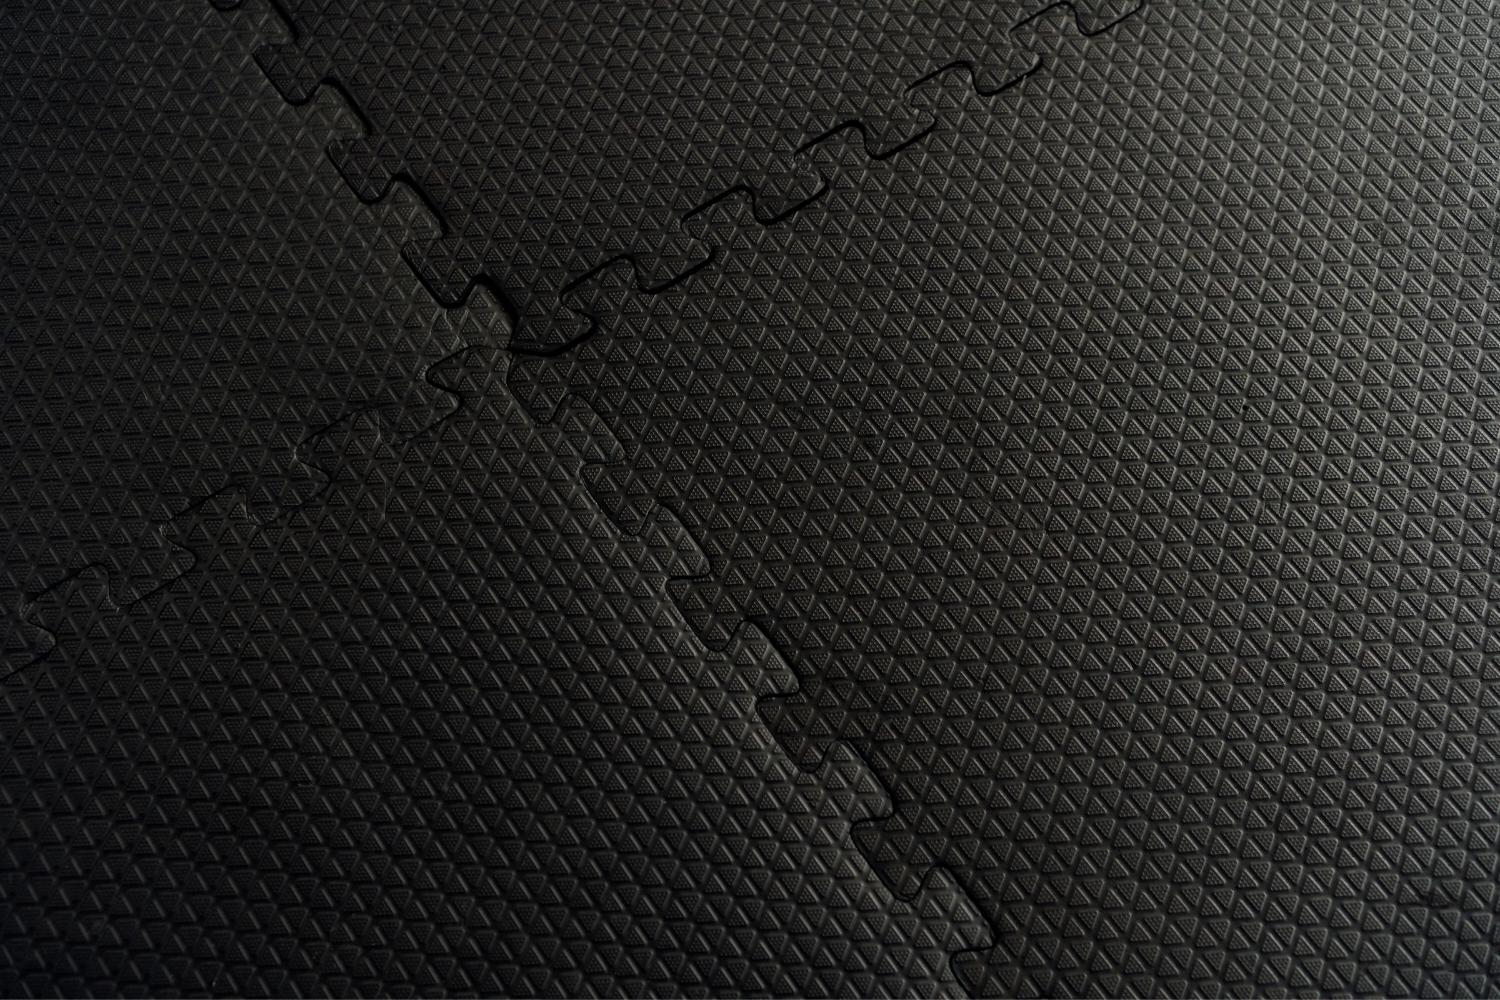 A closeup image of interlocking rubber floor tiles